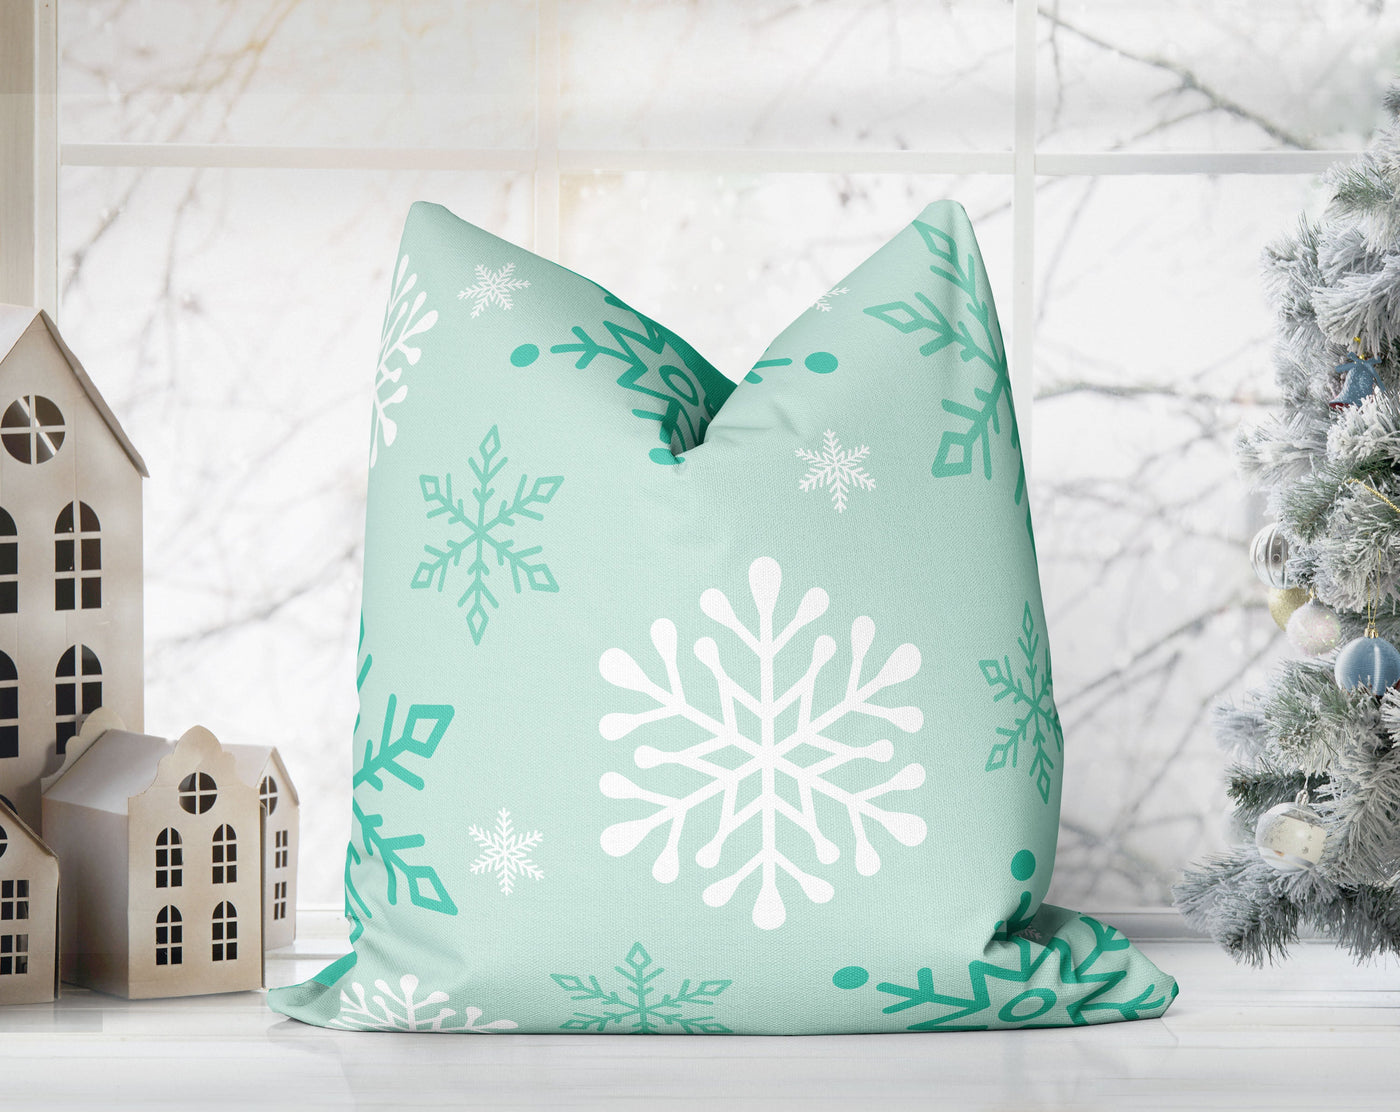 Enchanted Snowflakes Winter Christmas Frosty Mint Green Pillow Throw - Cush Potato Pillows